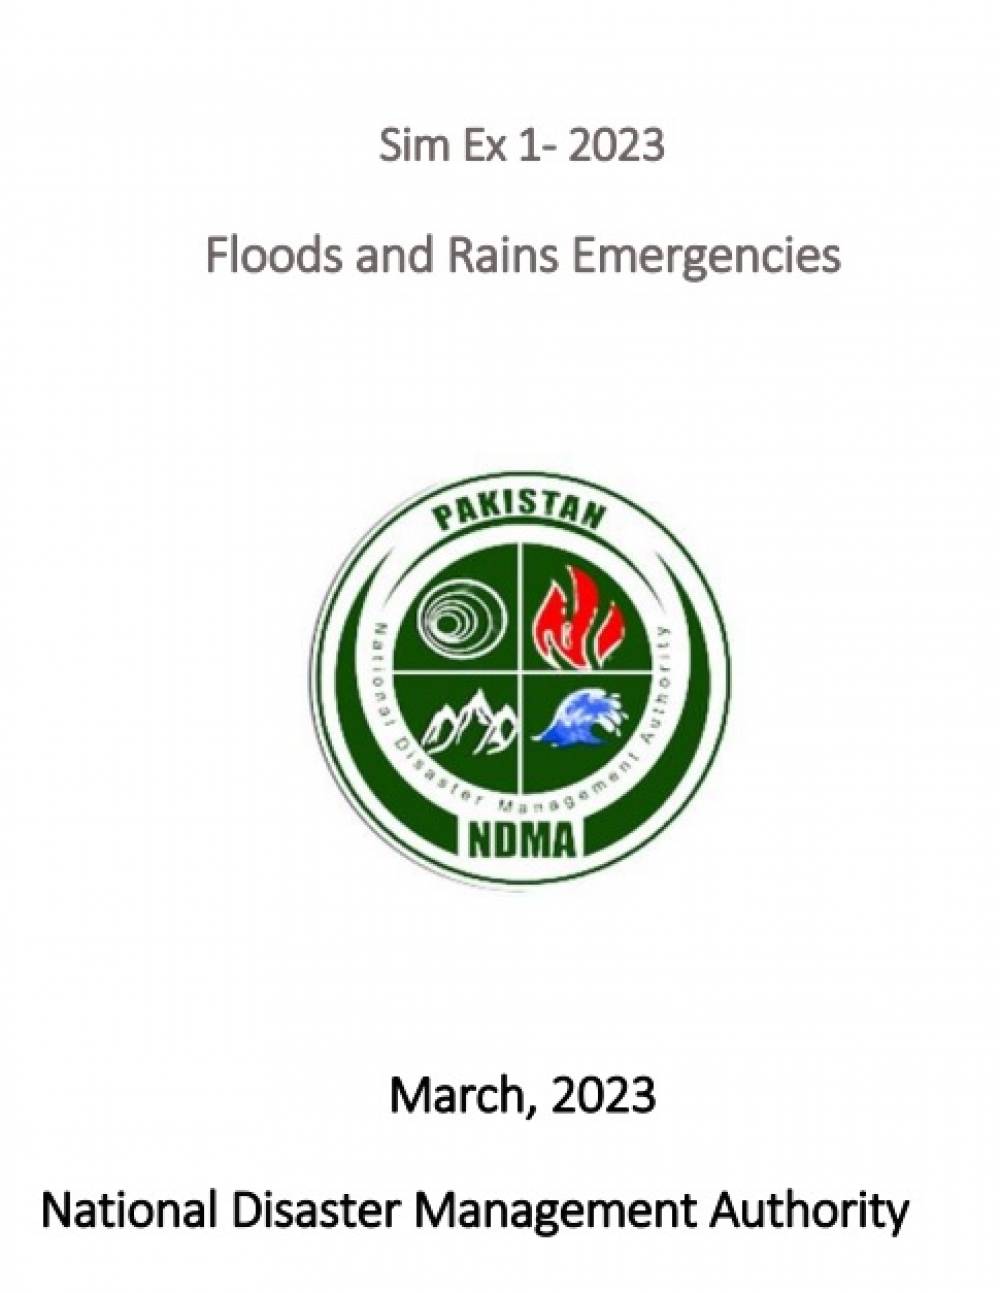 Floods and Rains Emergencies - 2023